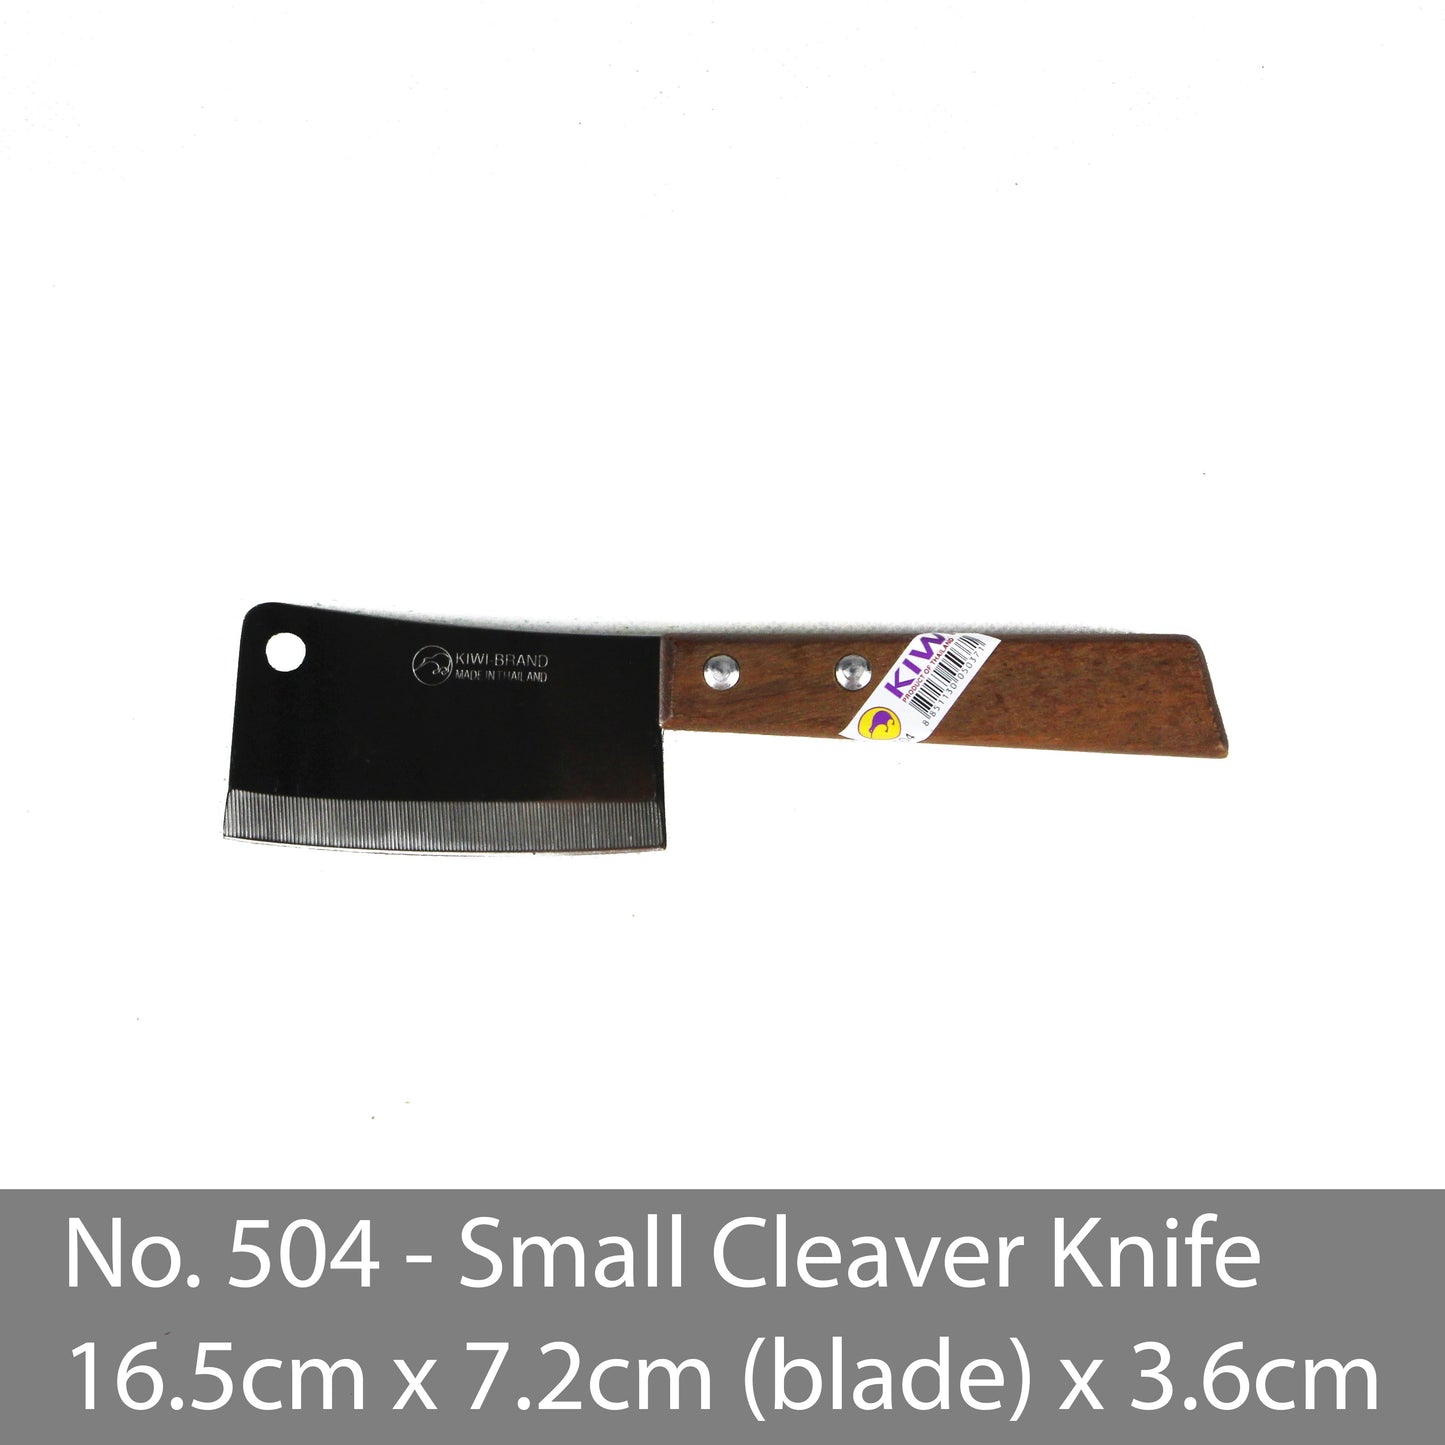 Kiwi Knives set 8 pcs Kitchen Knife Stainless steel Blade Wood Handle  Cooking